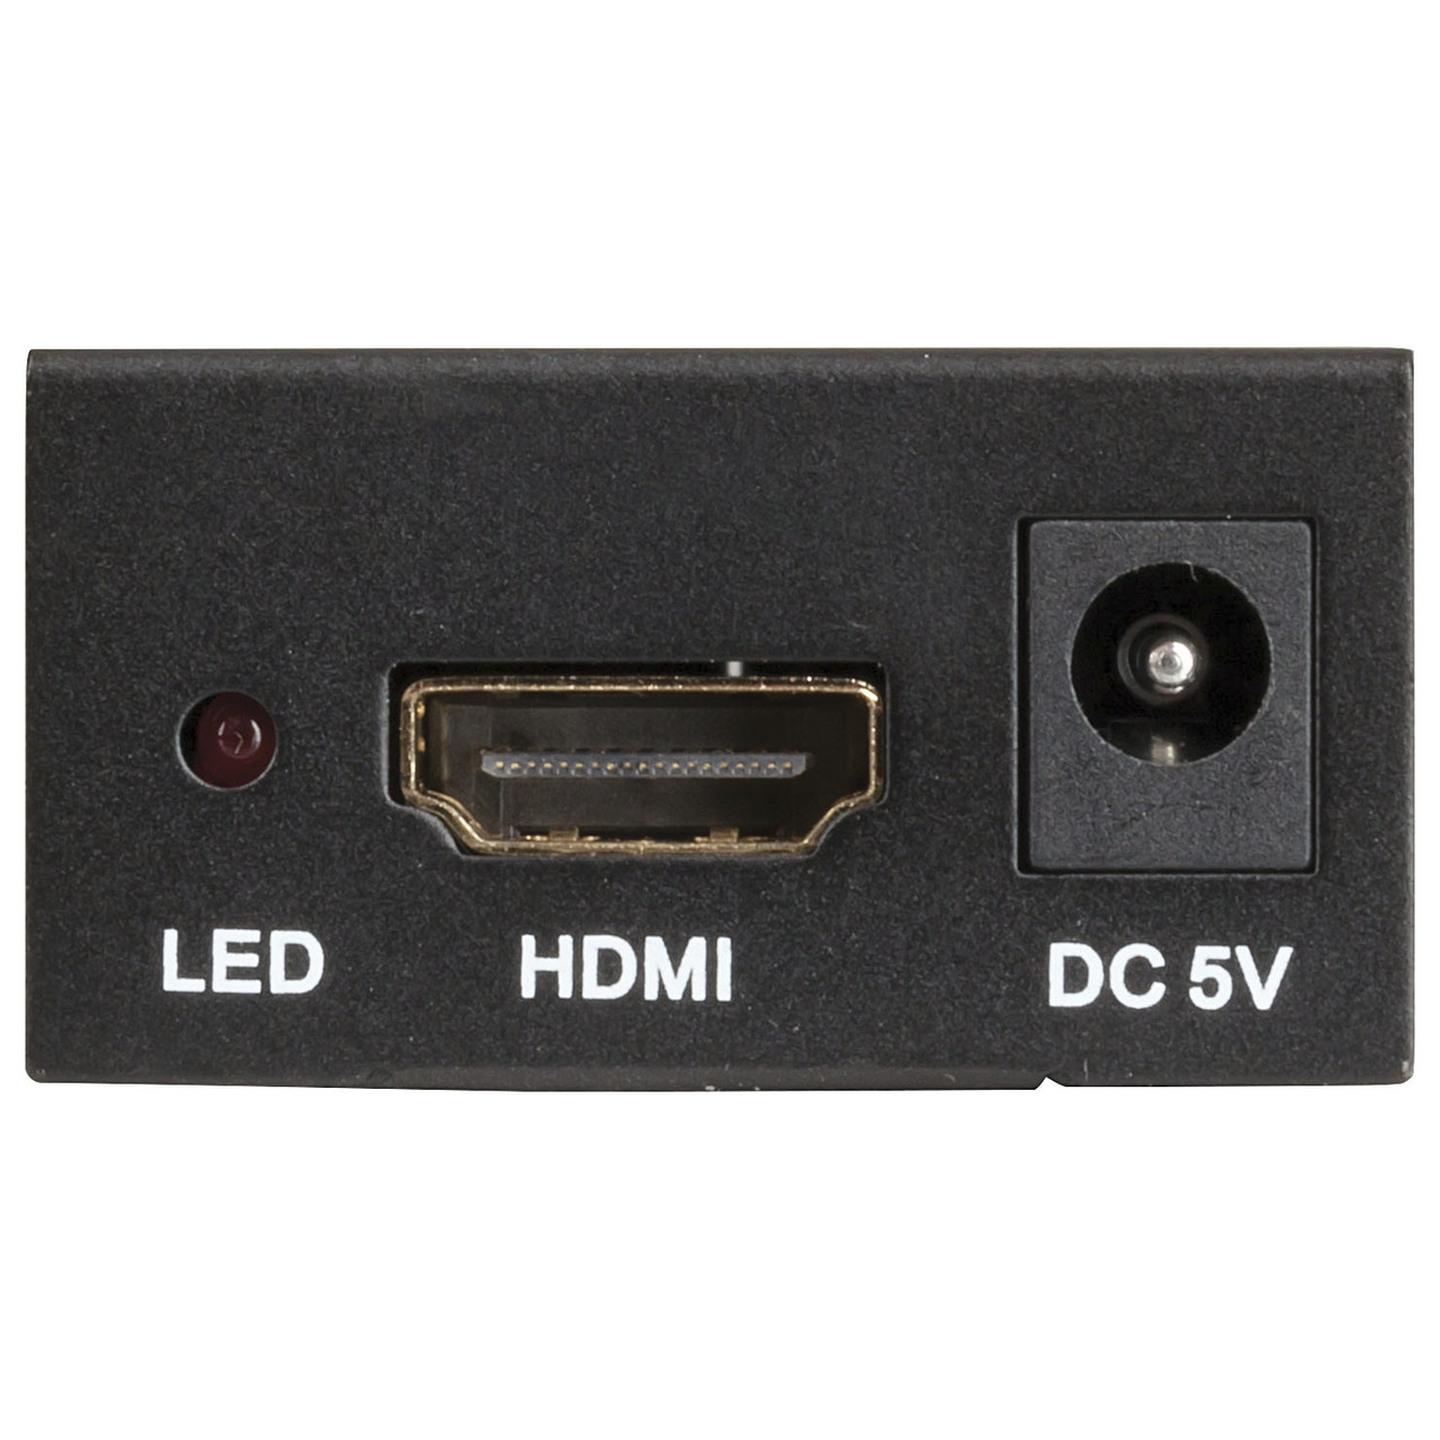 HDMI Over 2 x Cat5e/6 - 30m with IR Extender